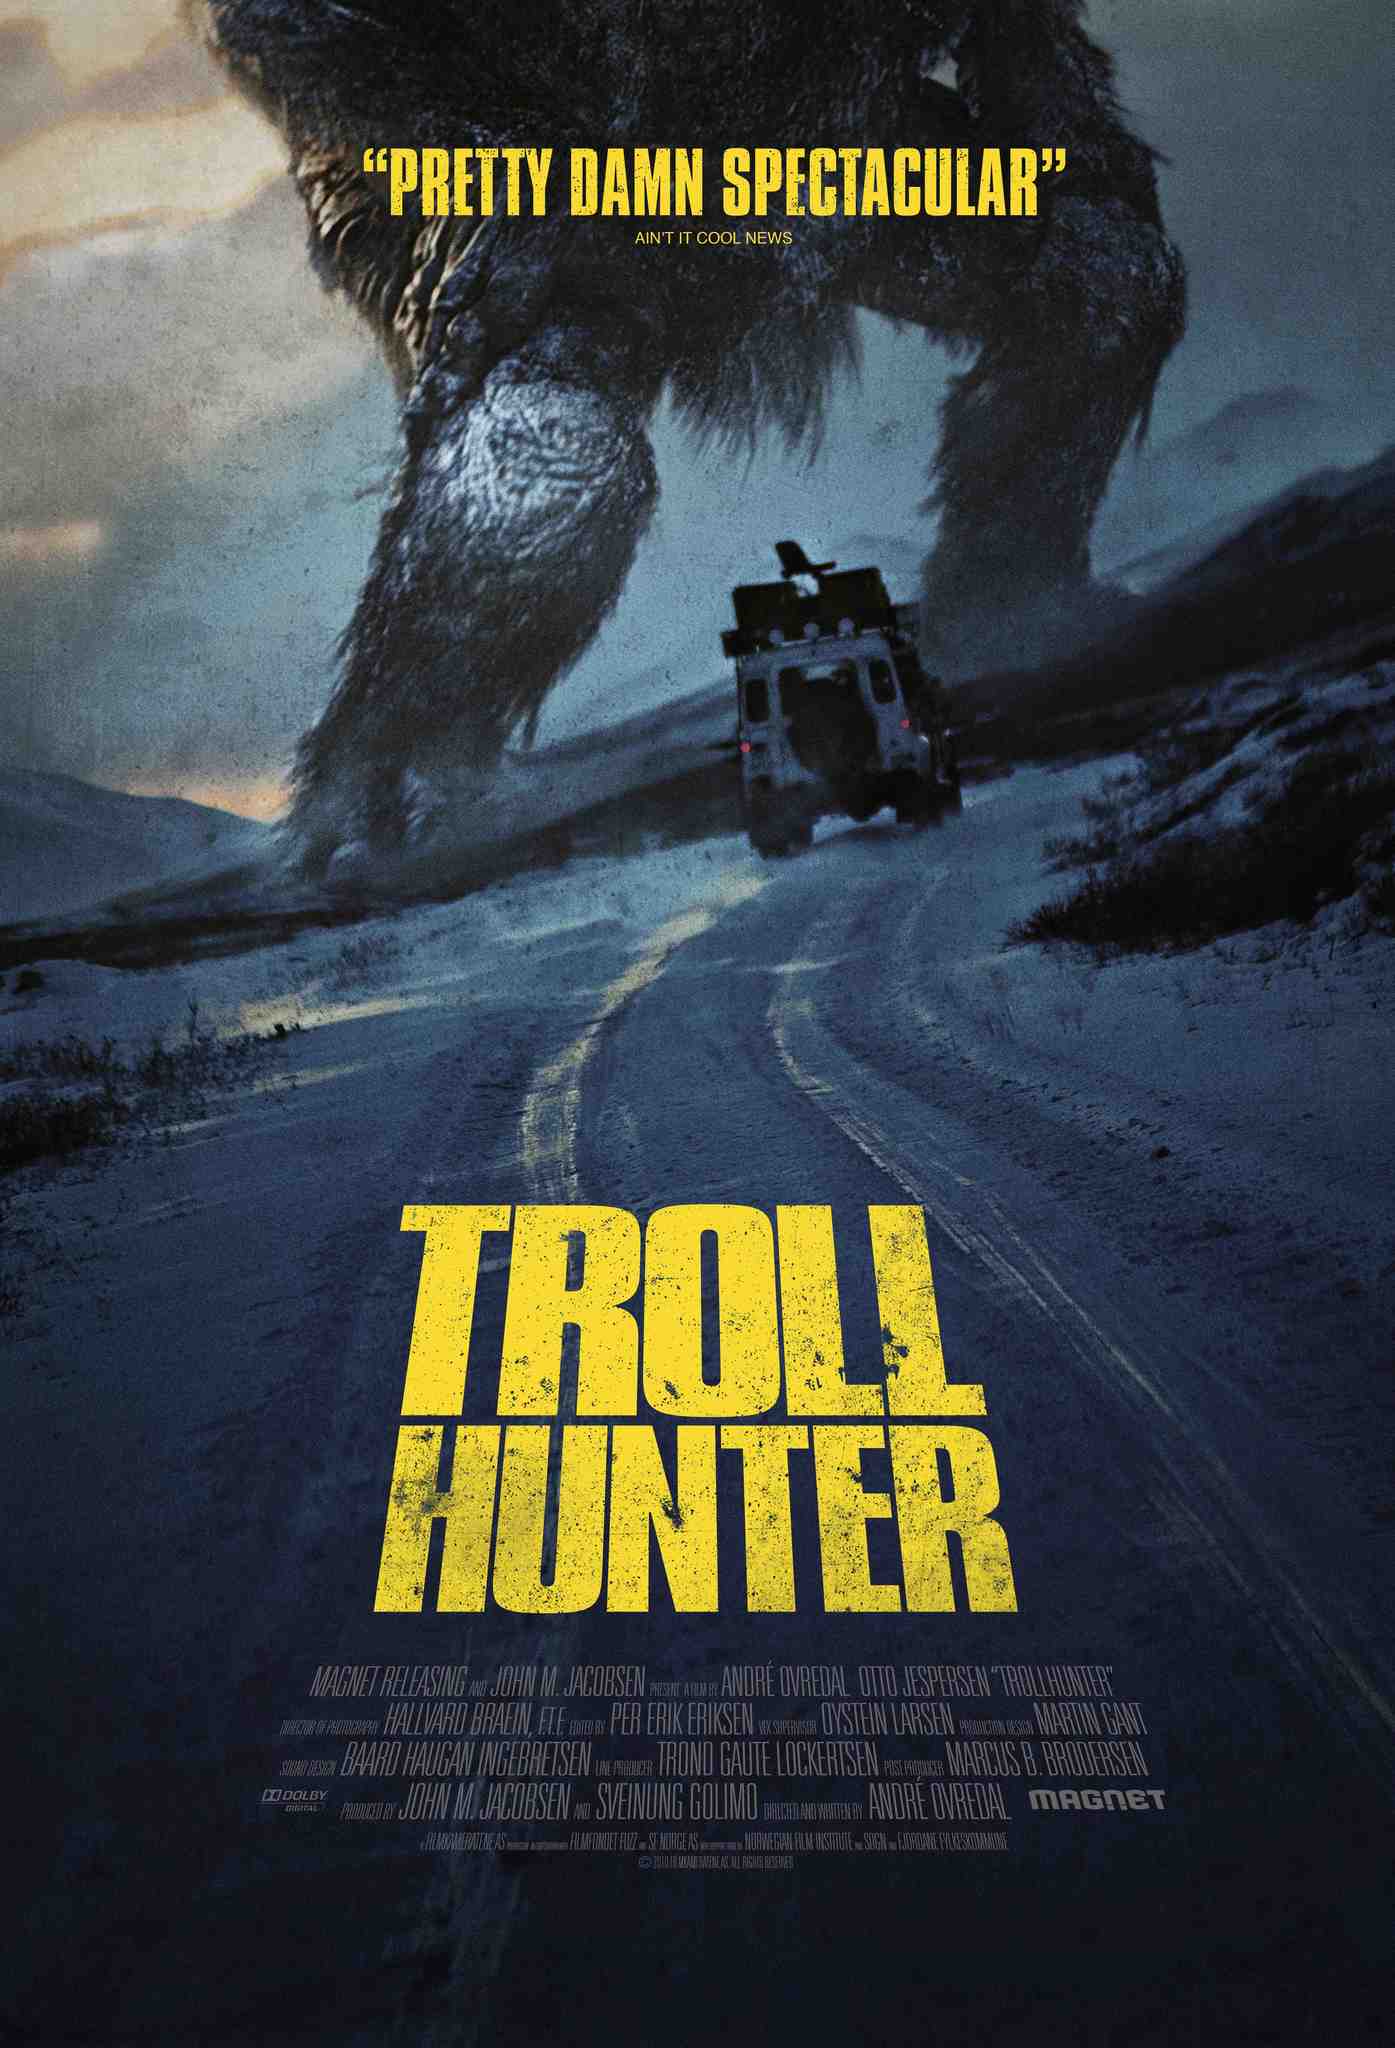 The Troll Hunter (2010)